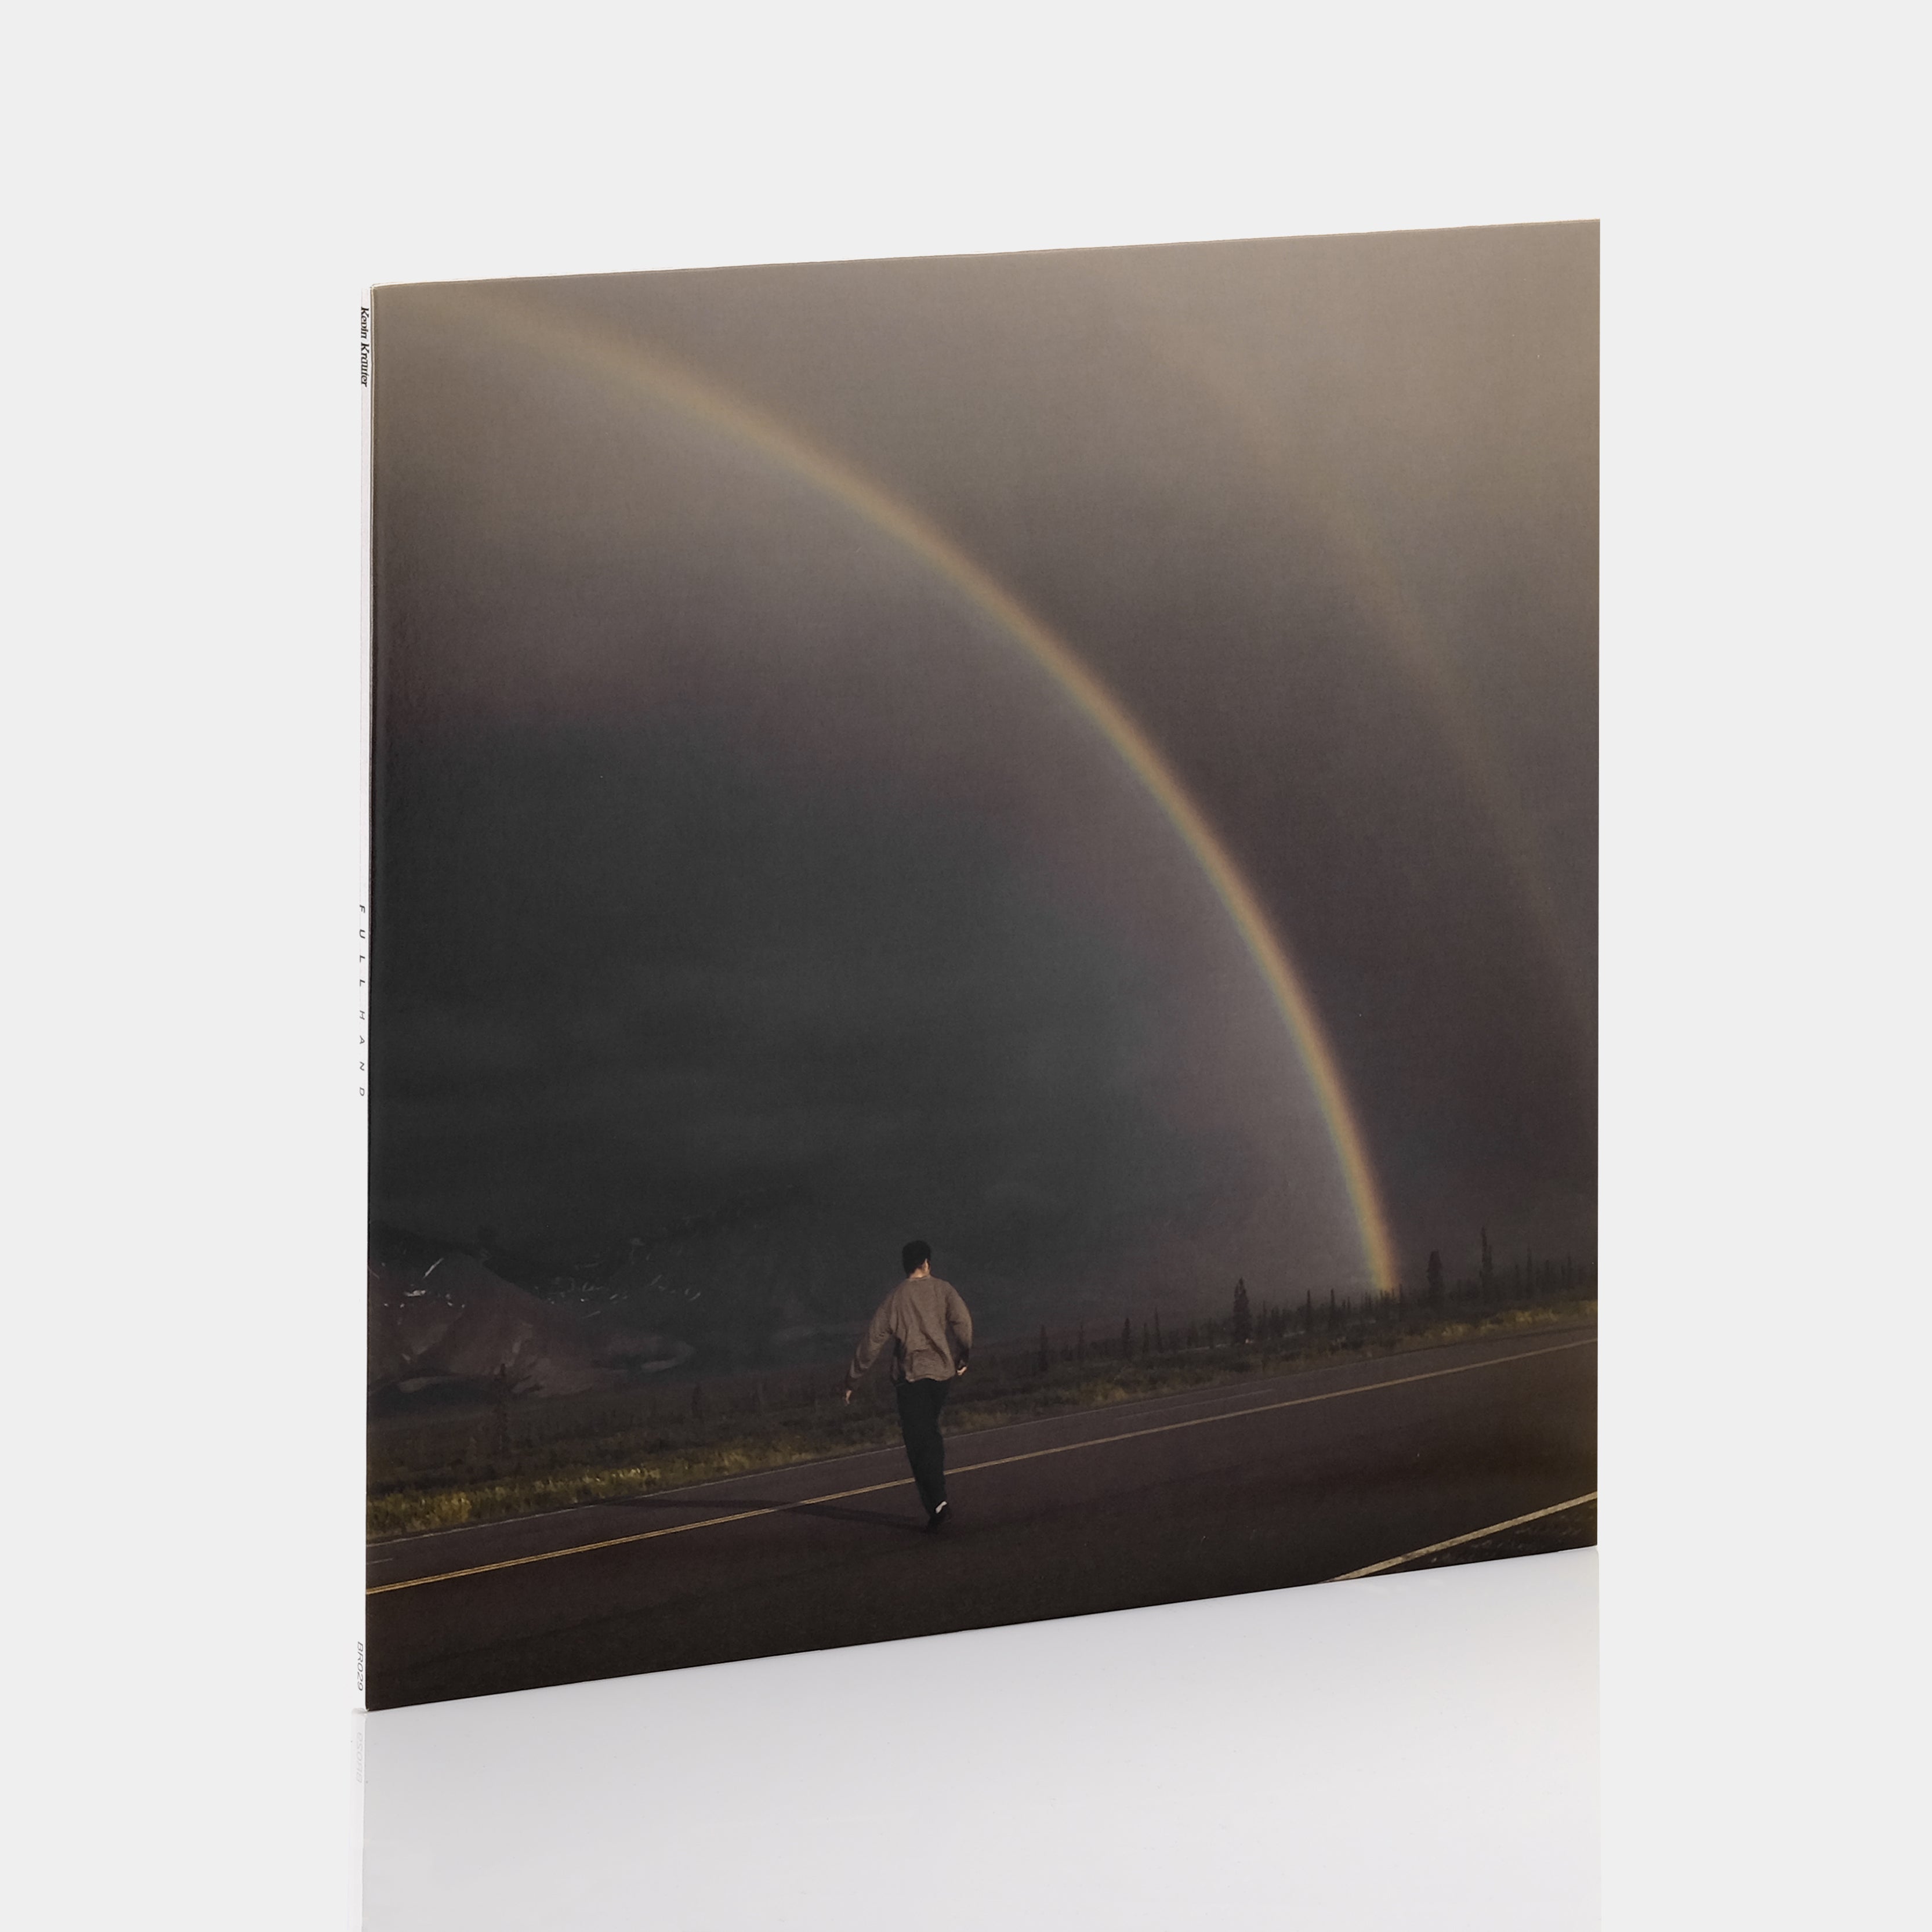 Kevin Krauter - Full Hand LP Yellow Transparent Vinyl Record